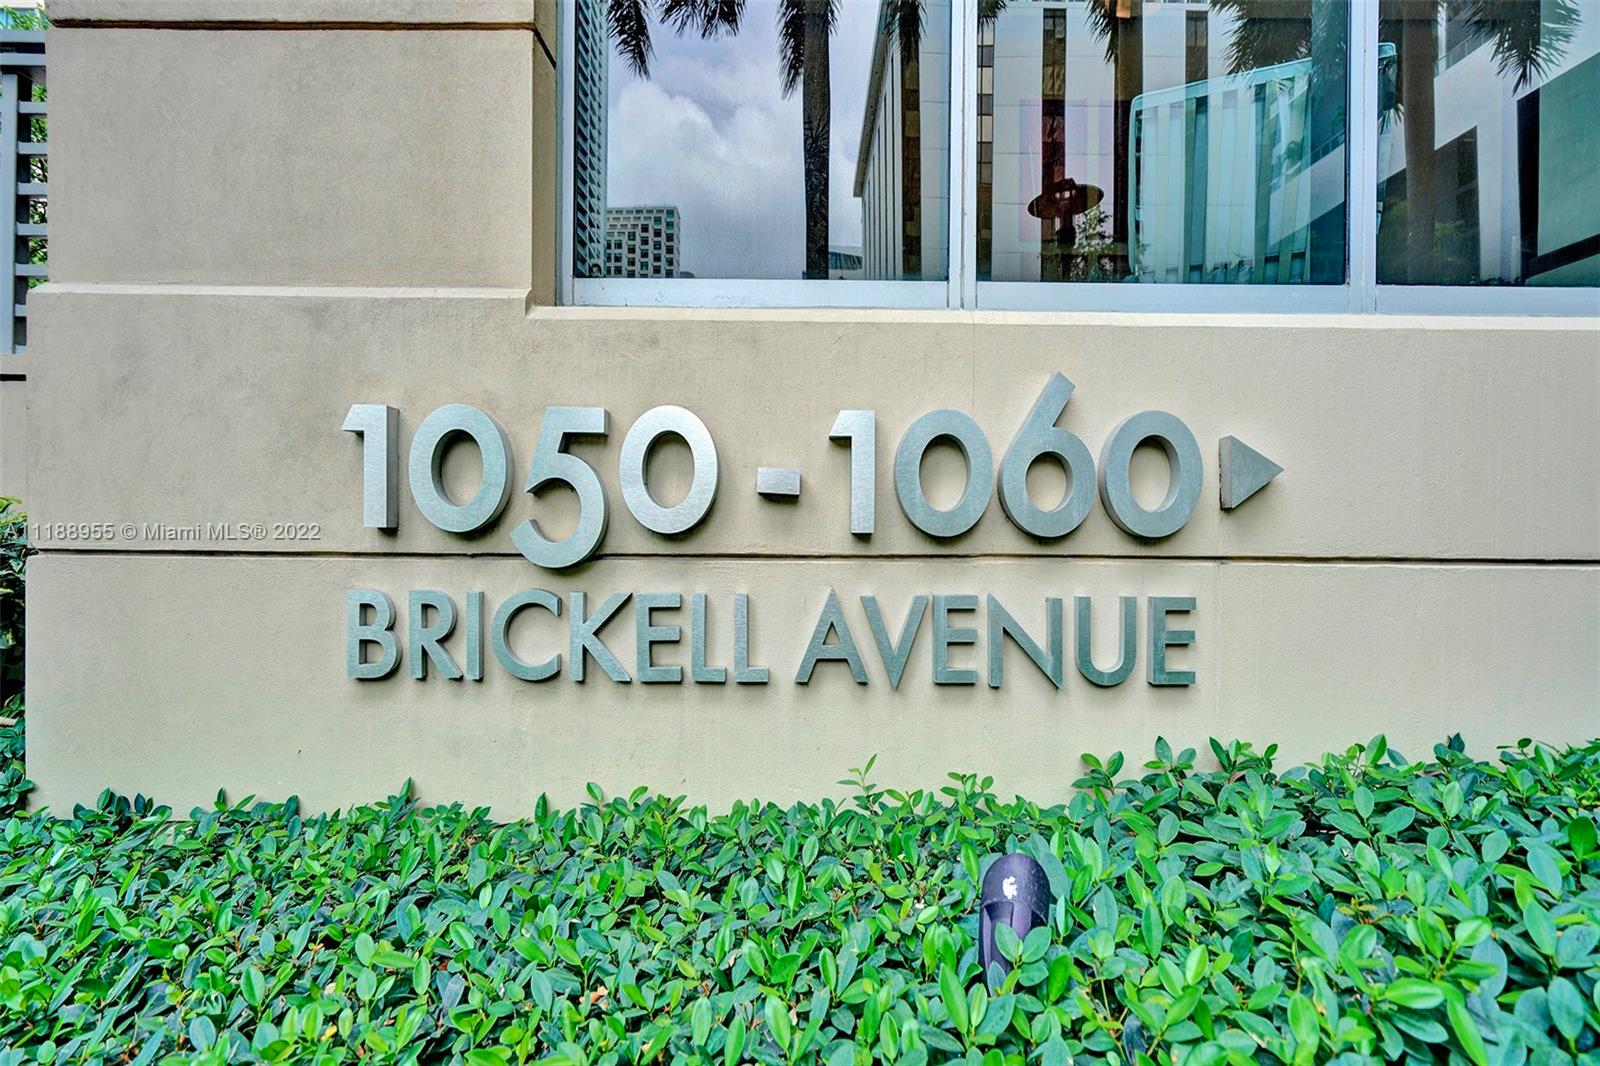 Avenue 1060 Brickell image #1